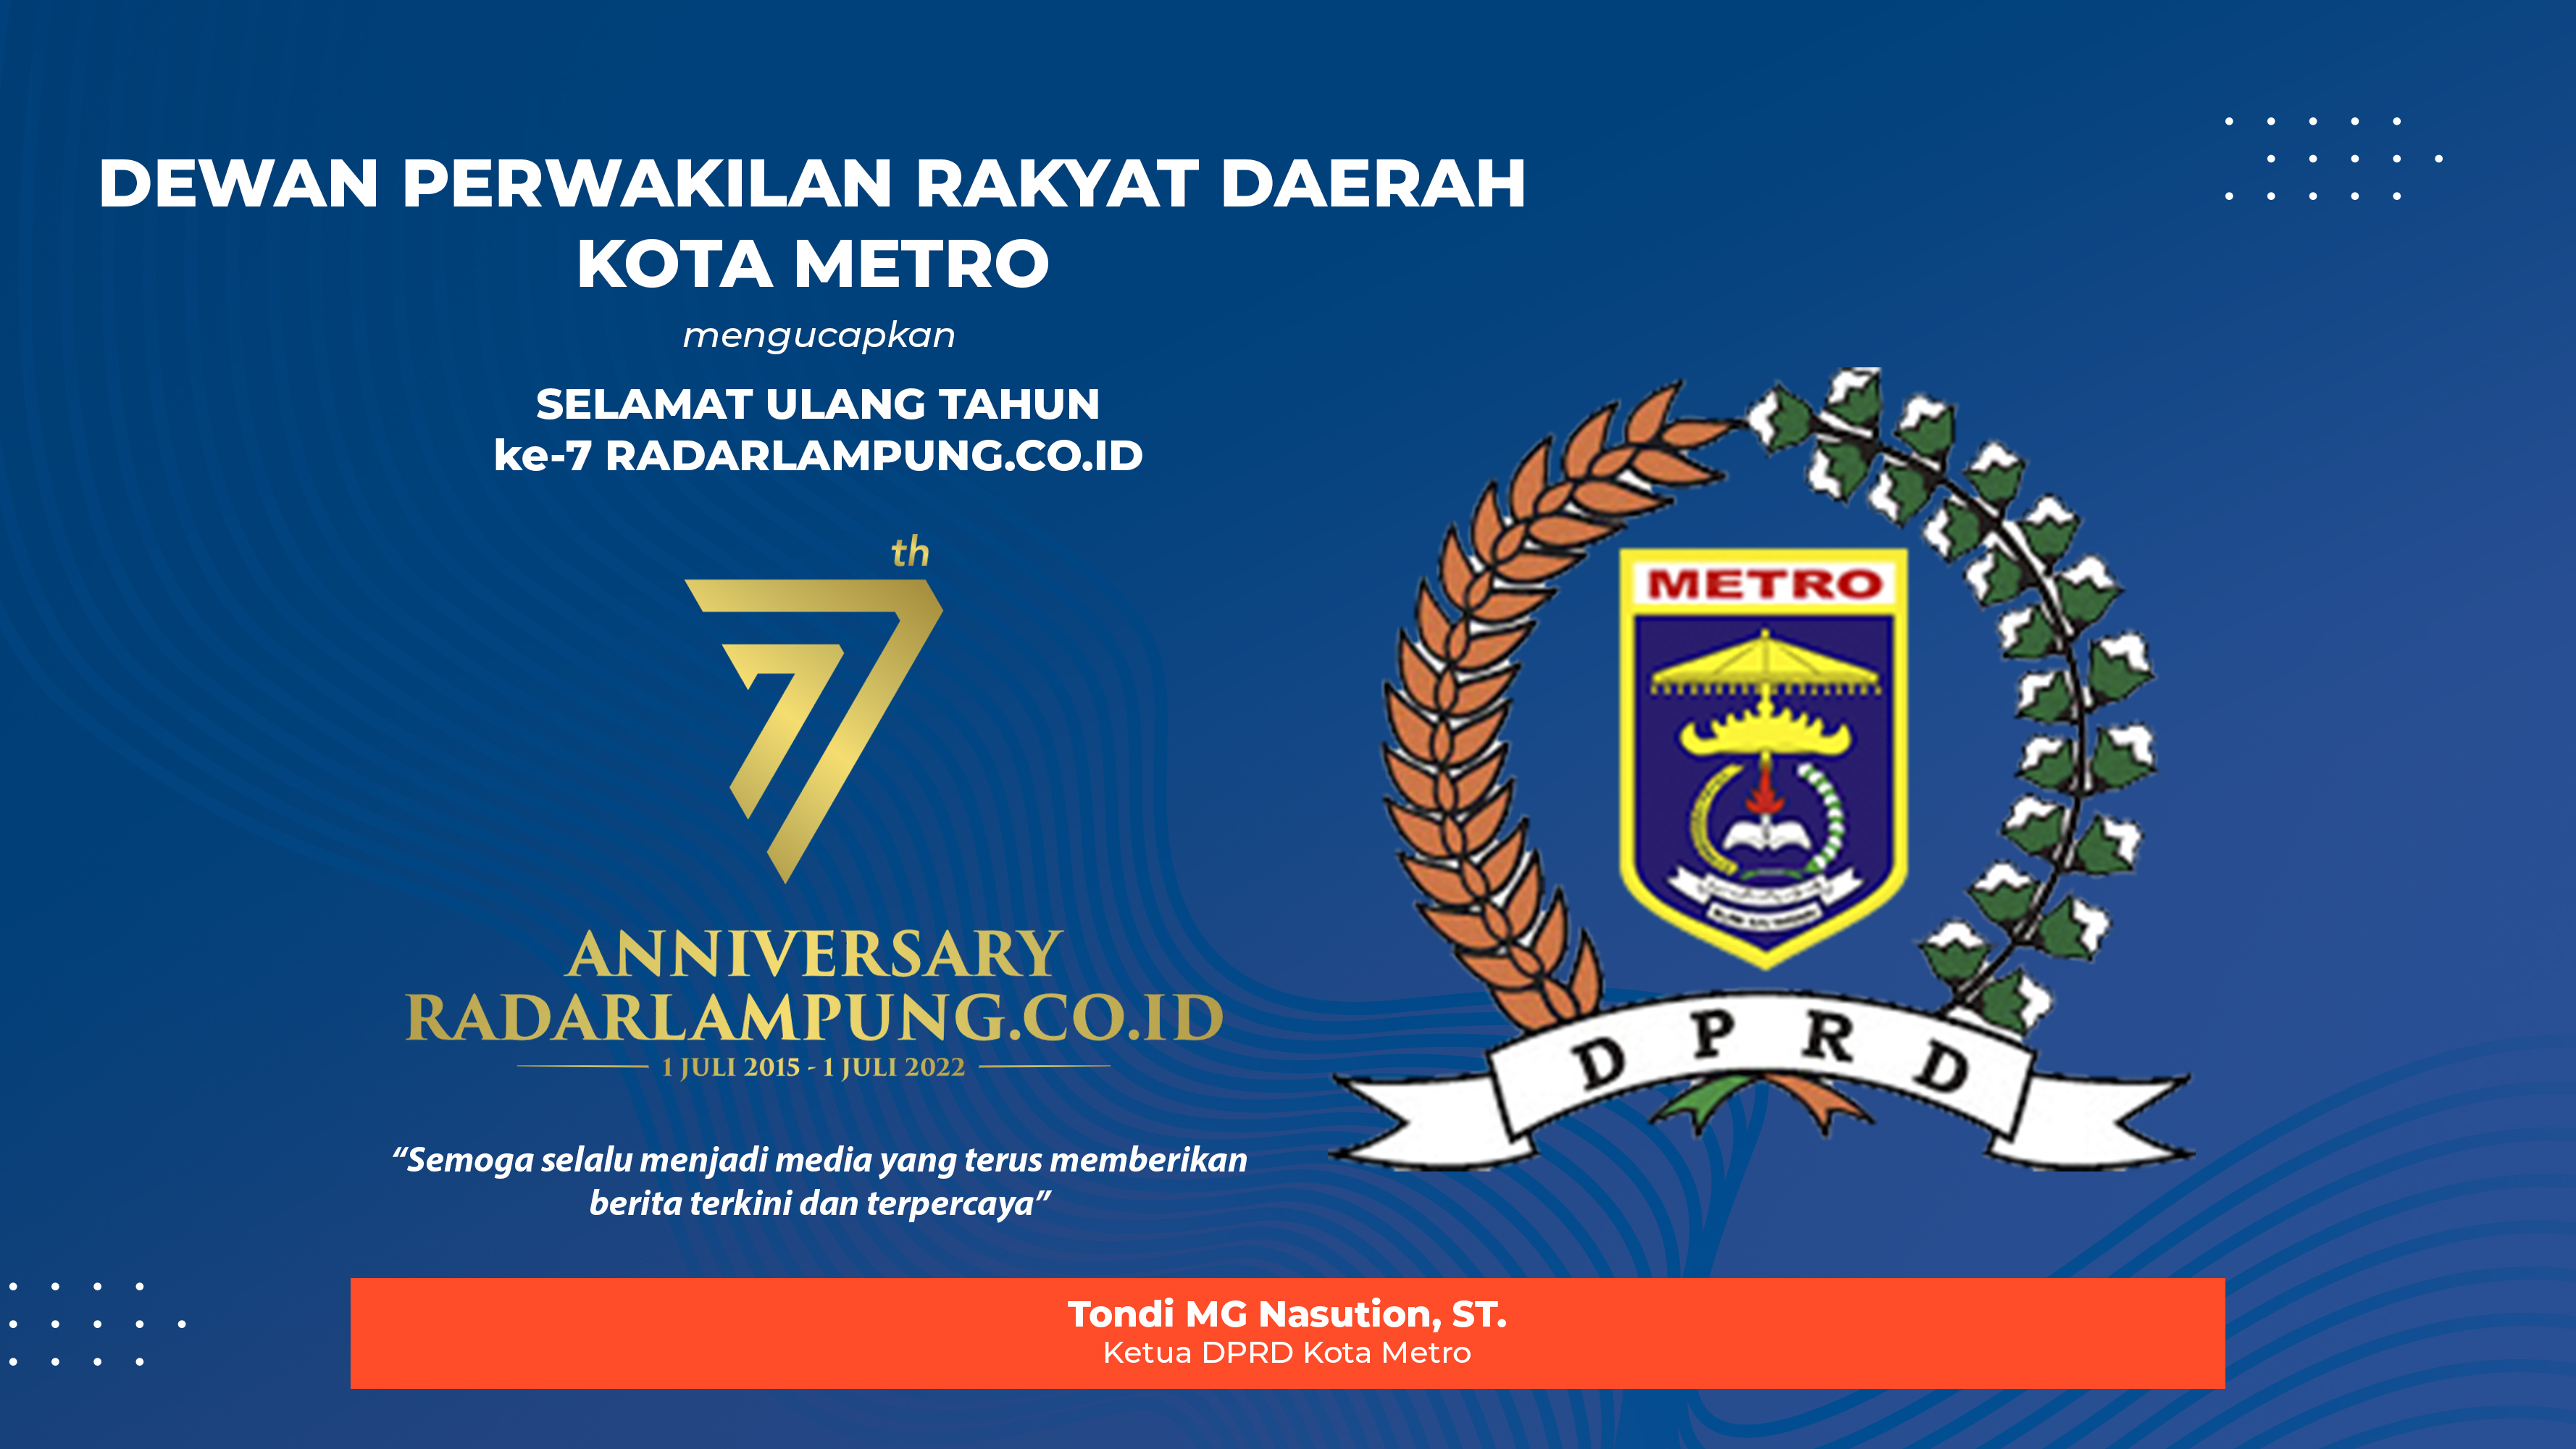 DPRD Kota Metro Mengucapkan Selamat Ulang Tahun ke-7 Radarlampung.co.id